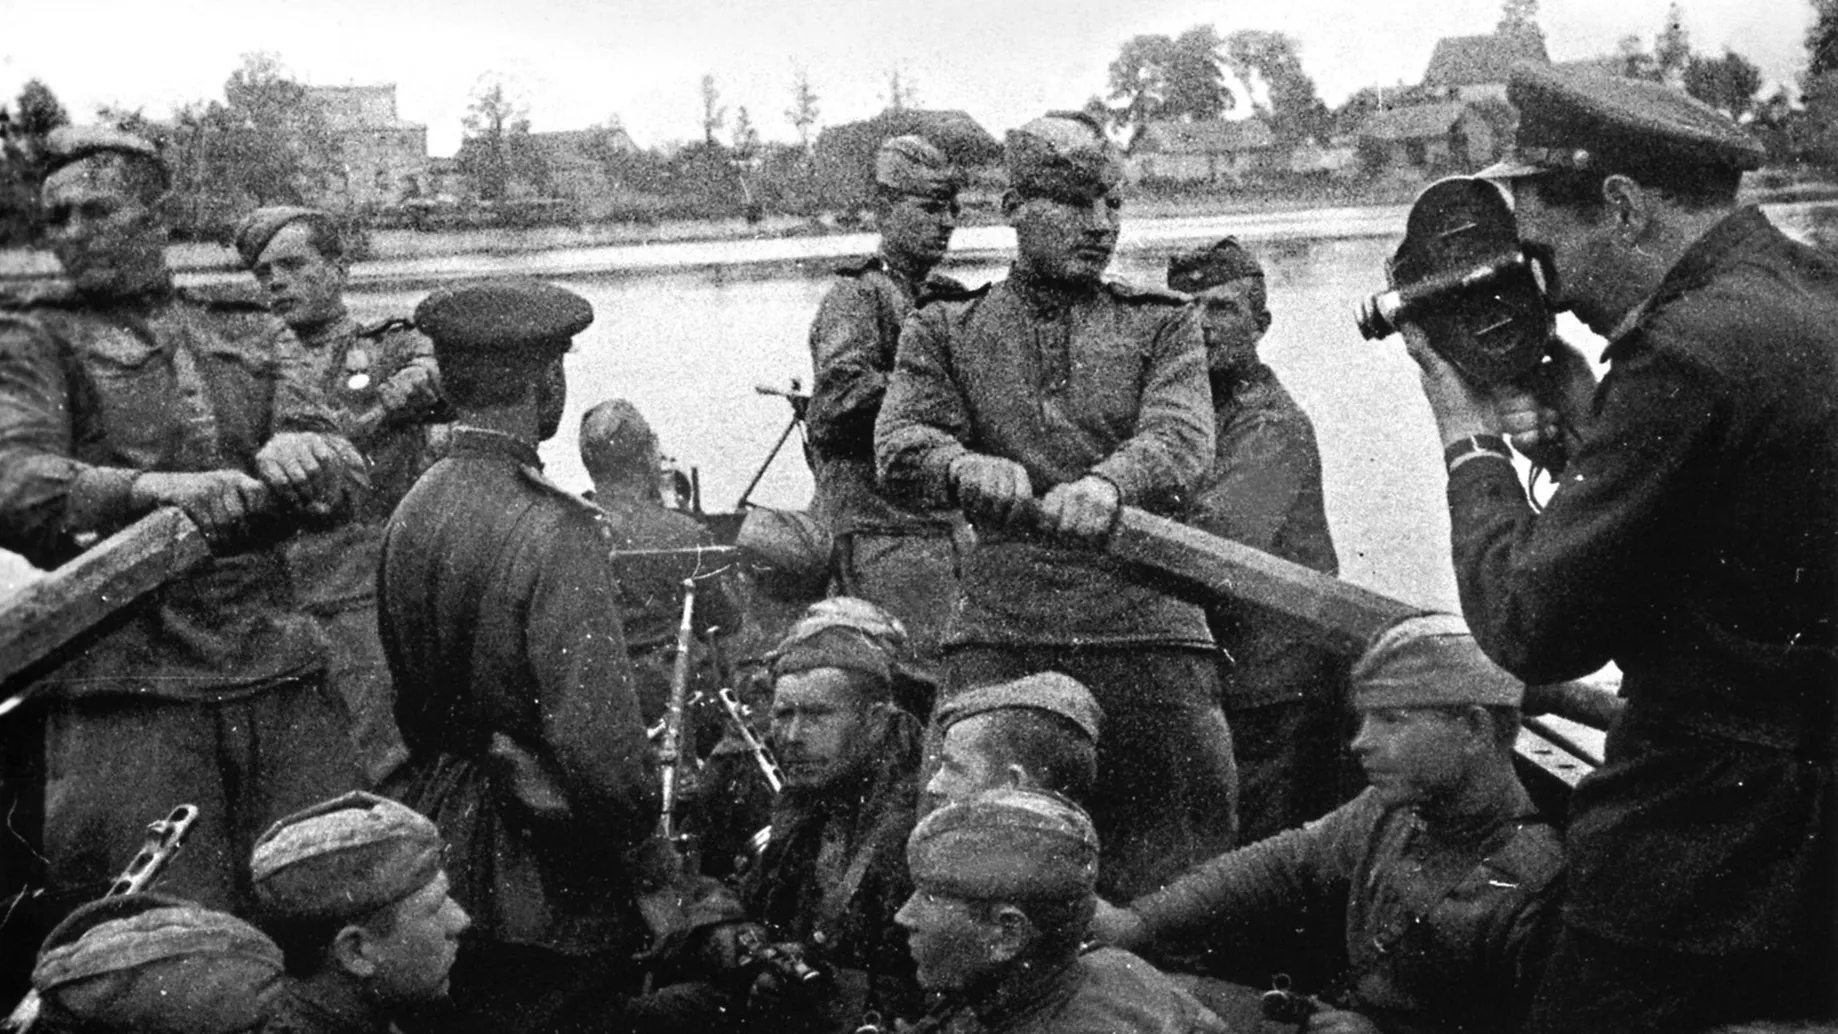 Съёмка форсирования реки Лиелупе в Латвии советскими войсками. 1944 год. Фото с сайта waralbum.ru